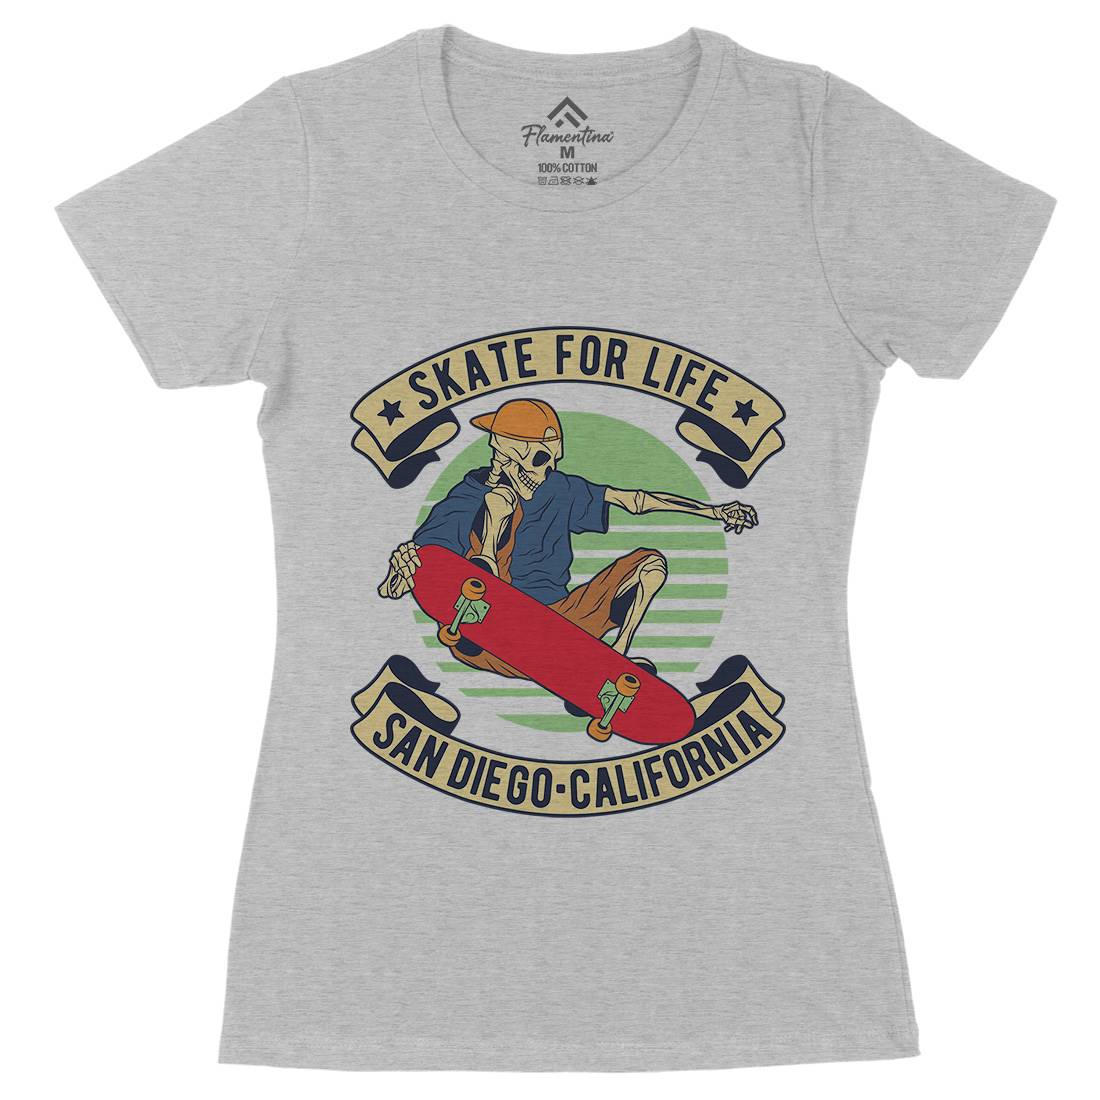 For Life Womens Organic Crew Neck T-Shirt Skate D970